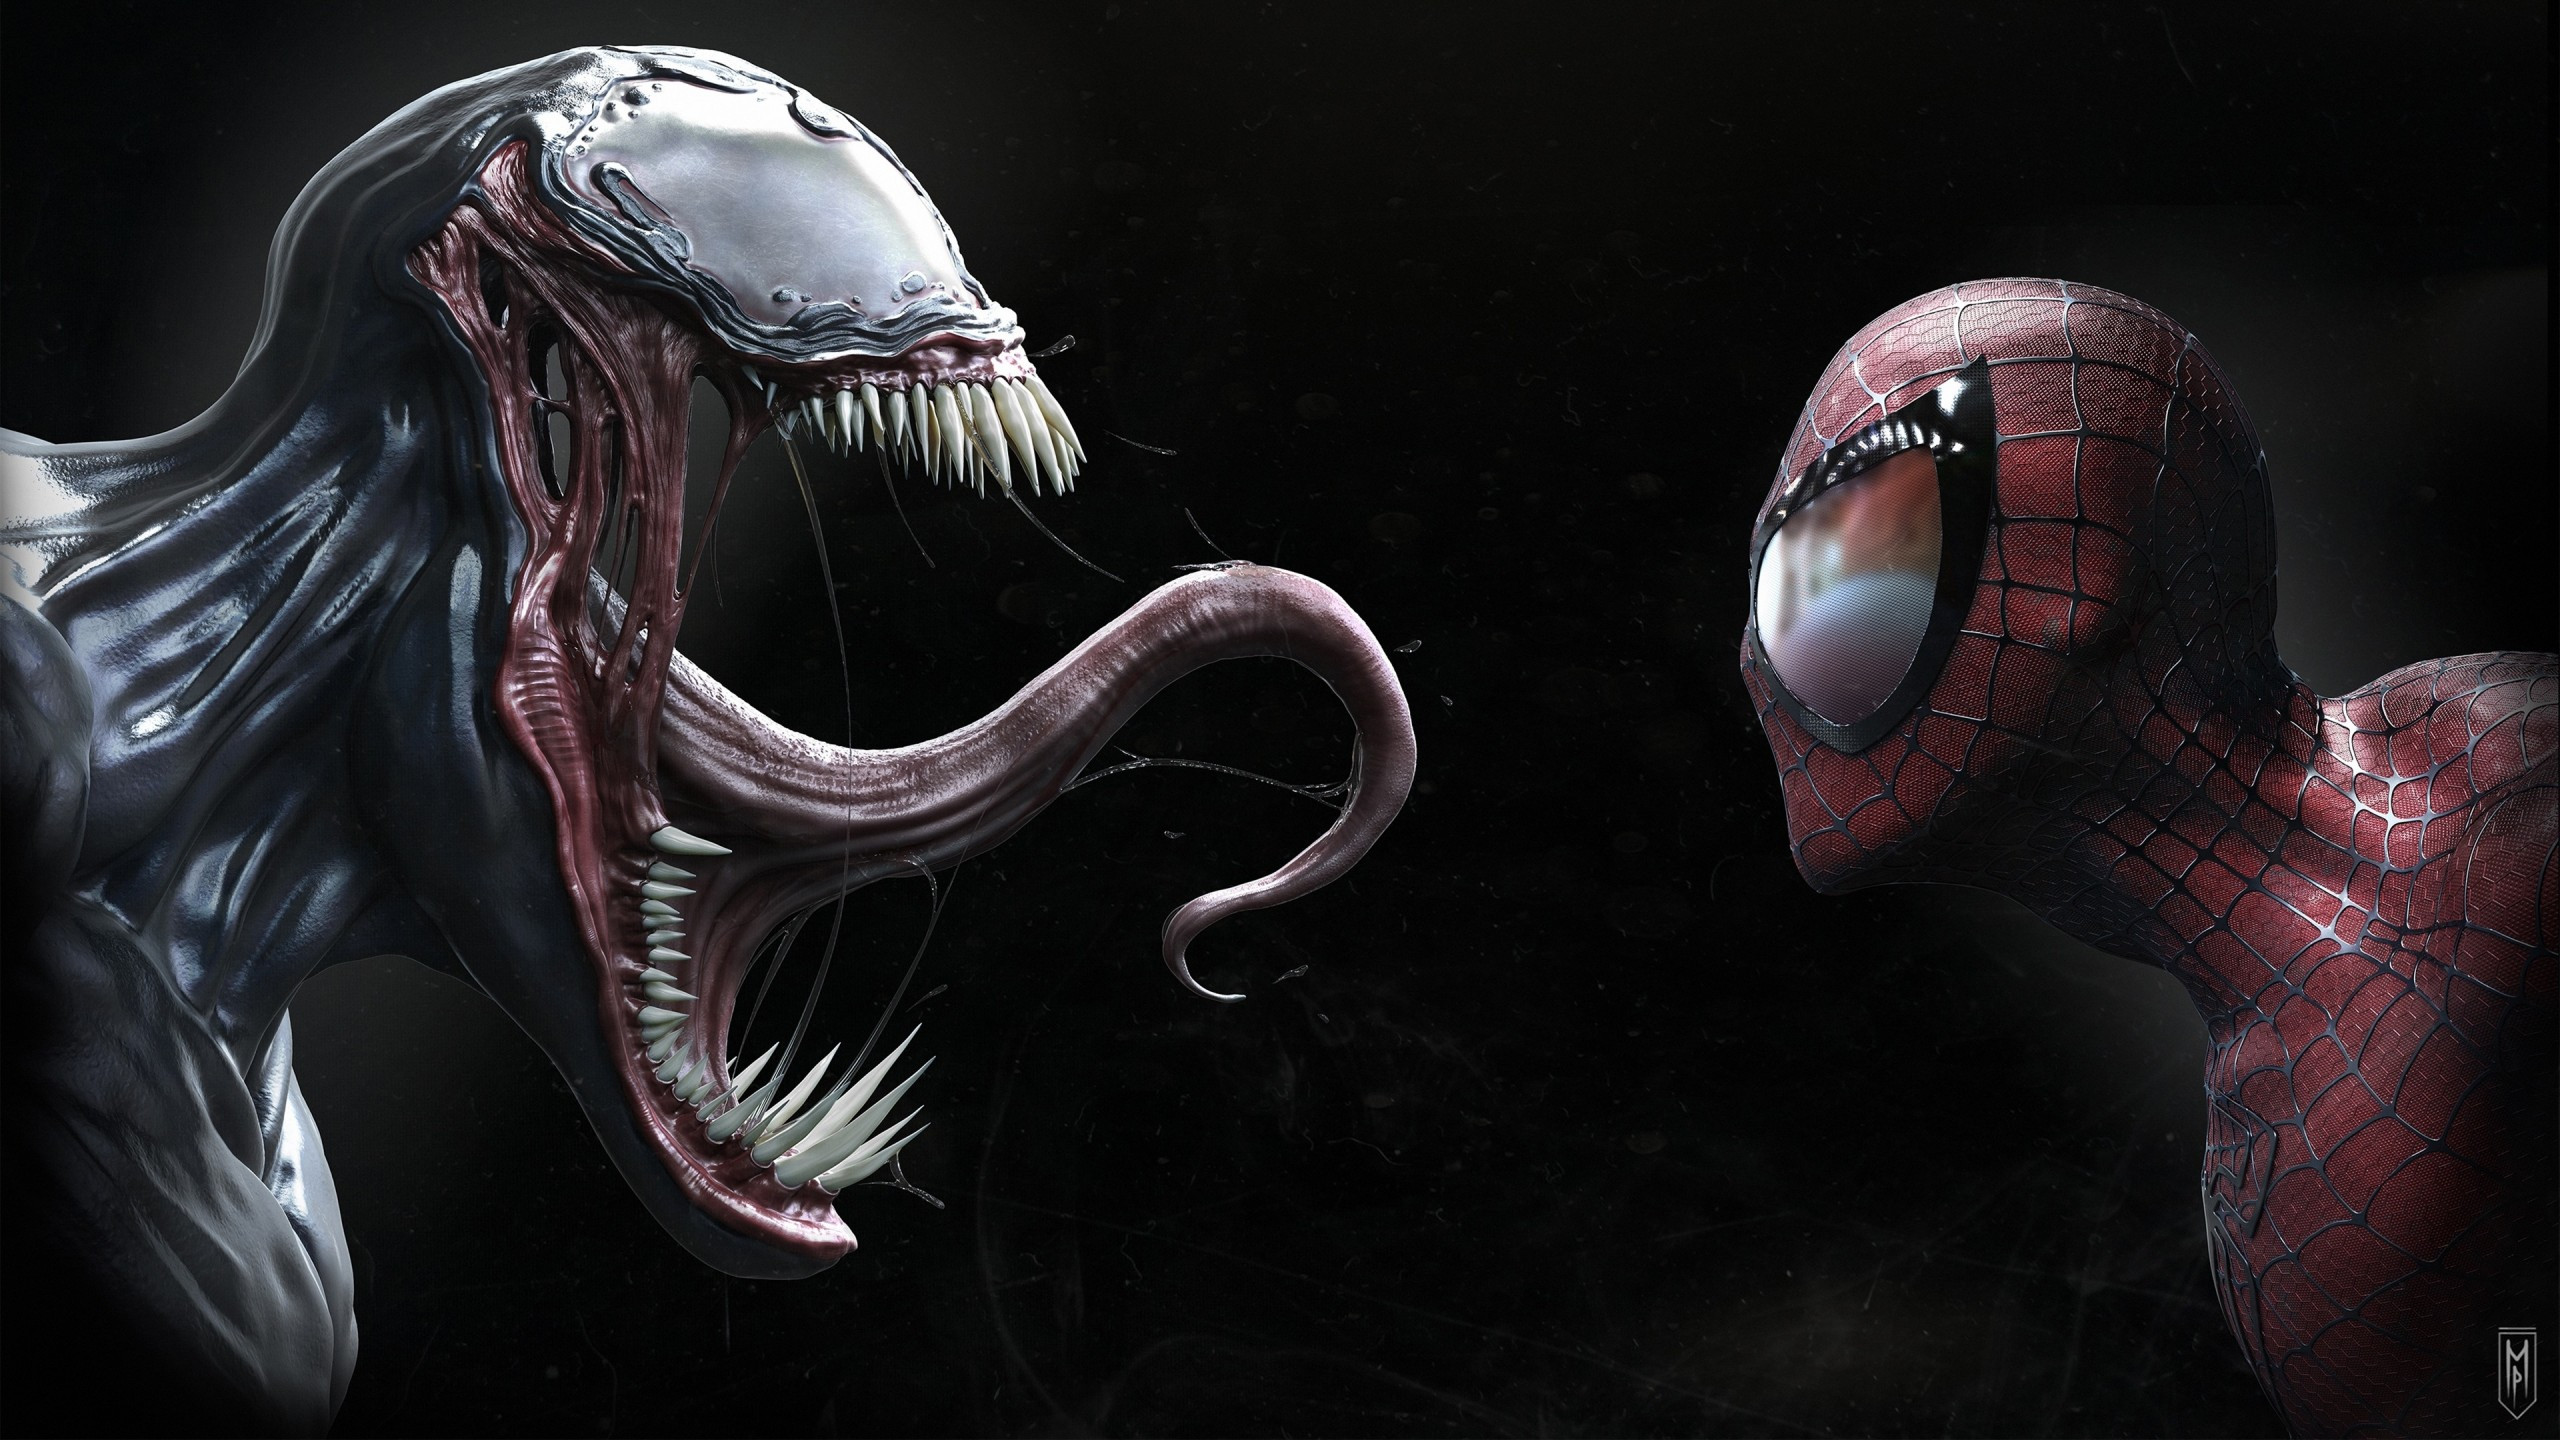 Download 2560x1440 Venom X Spider Man, Artwork, Superhero, Villain Wallpaper For IMac 27 Inch